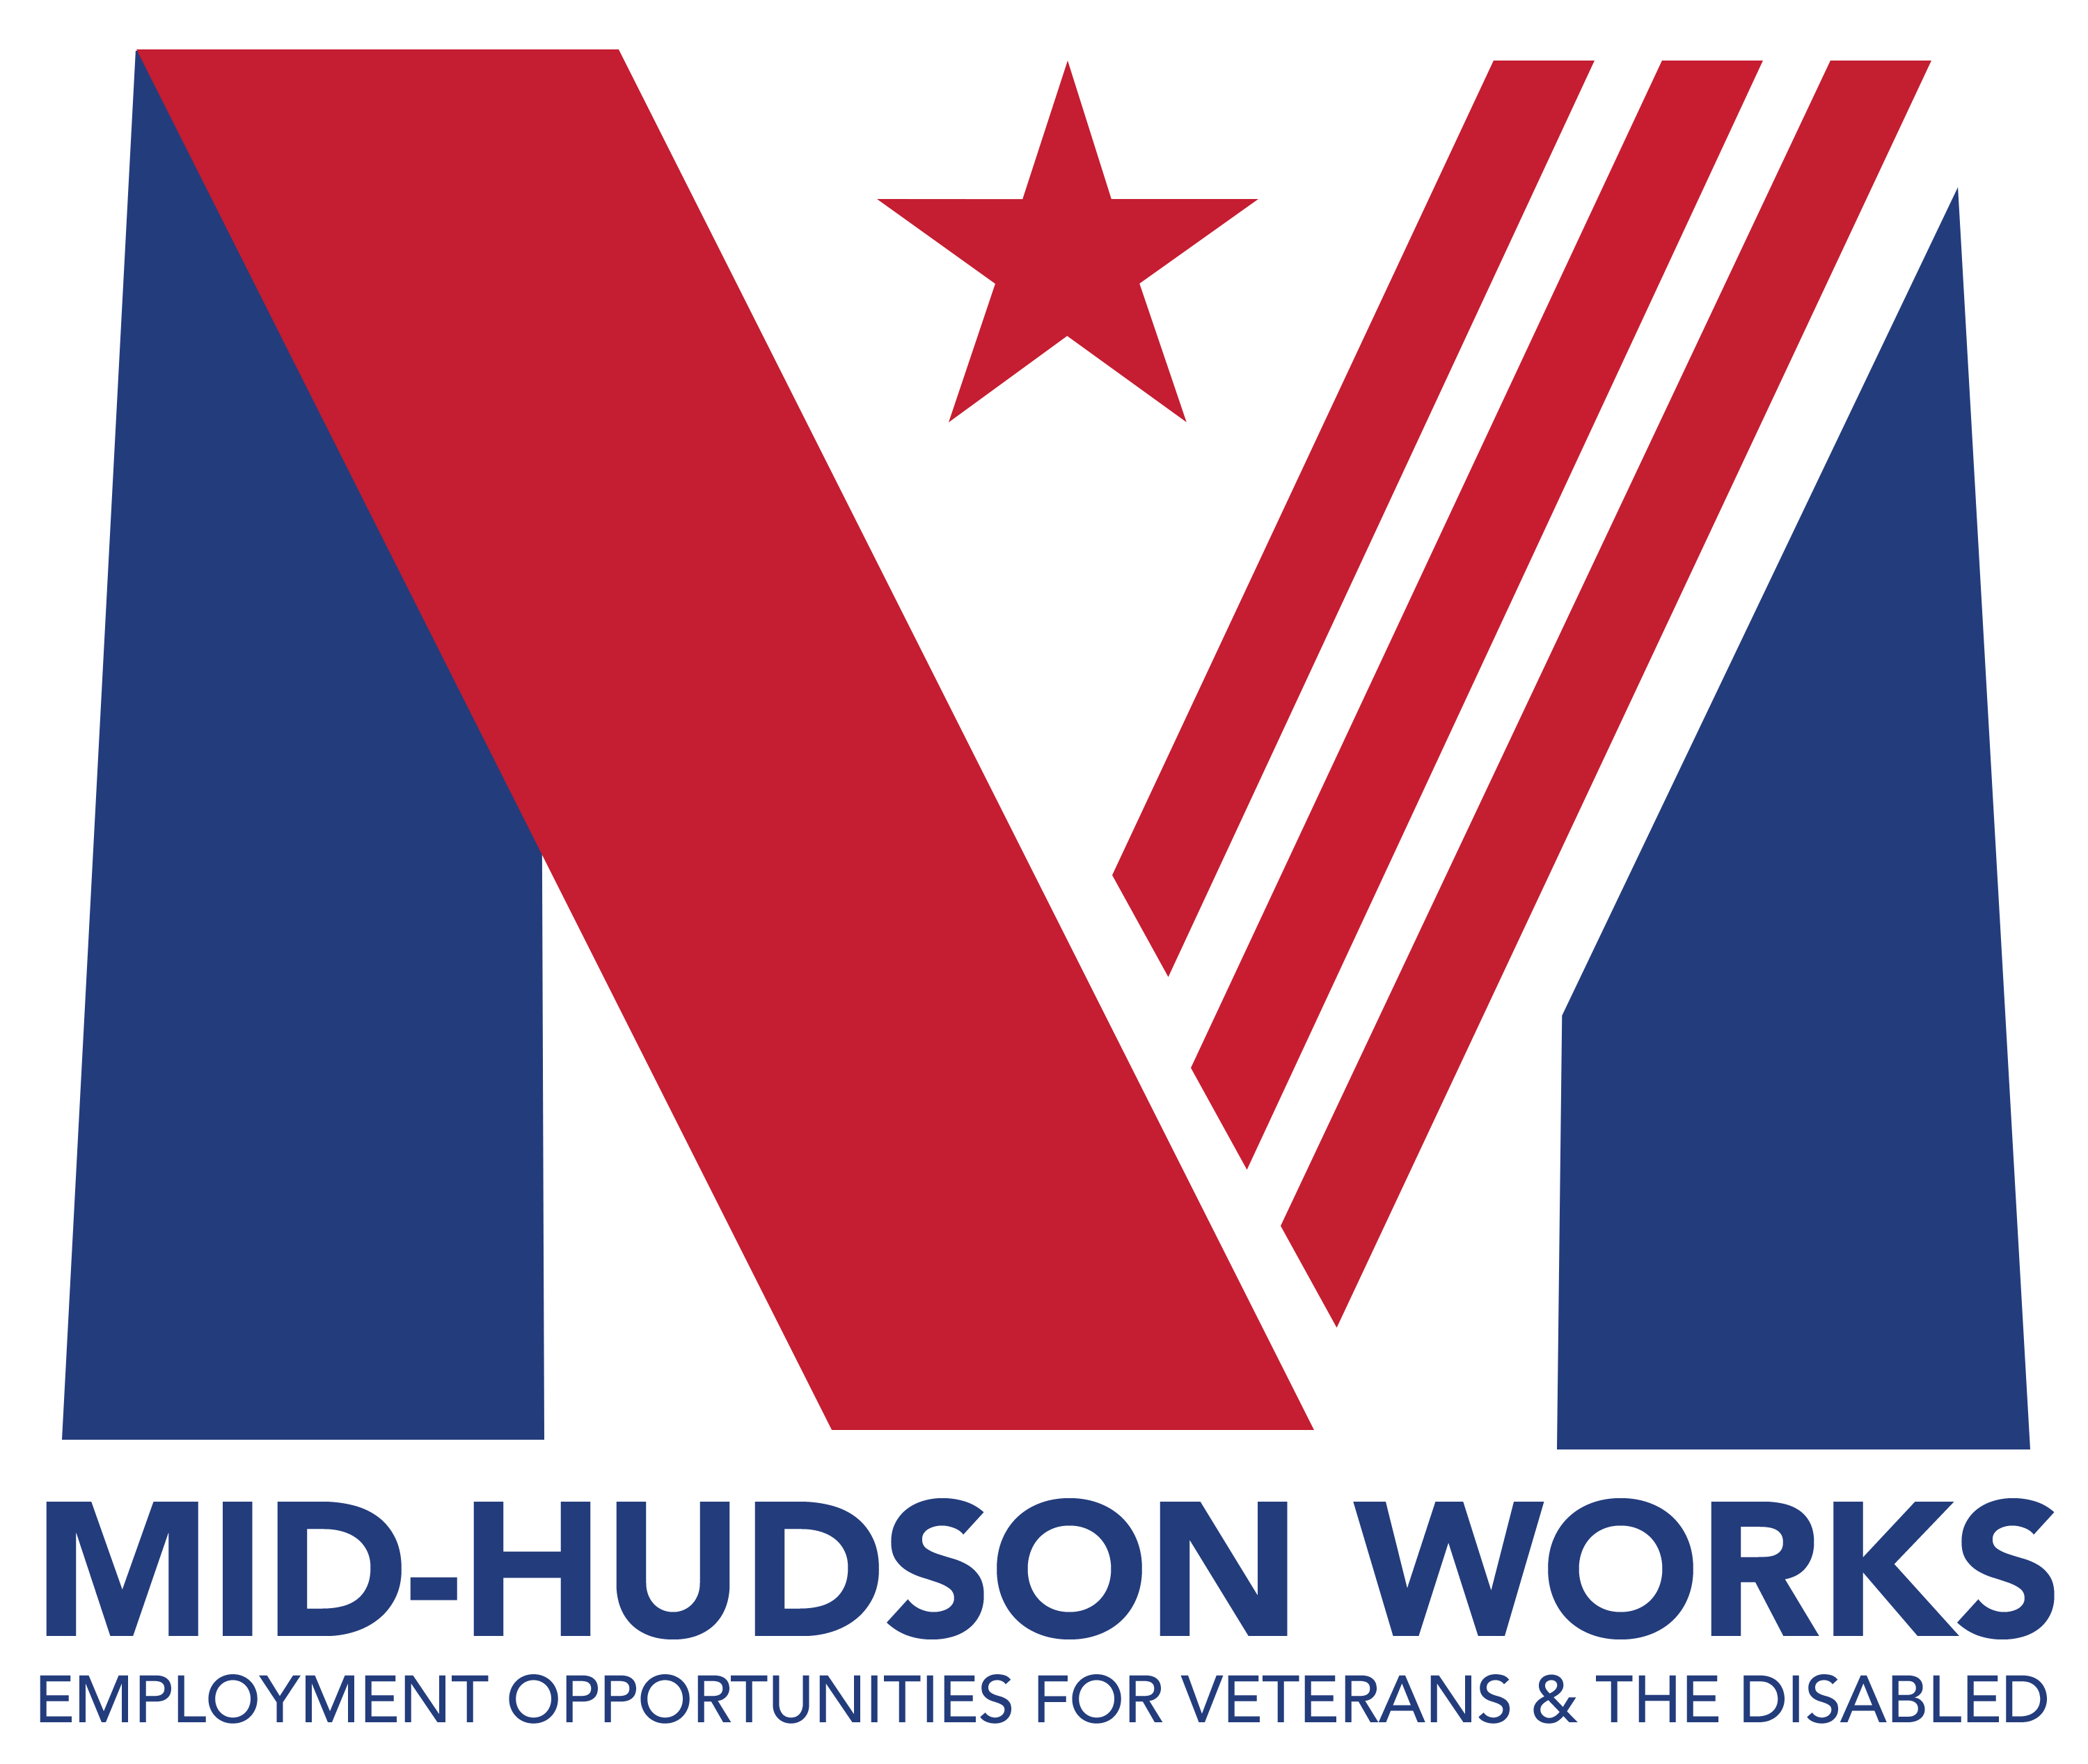 logo for mid-hudson workship for the disabled